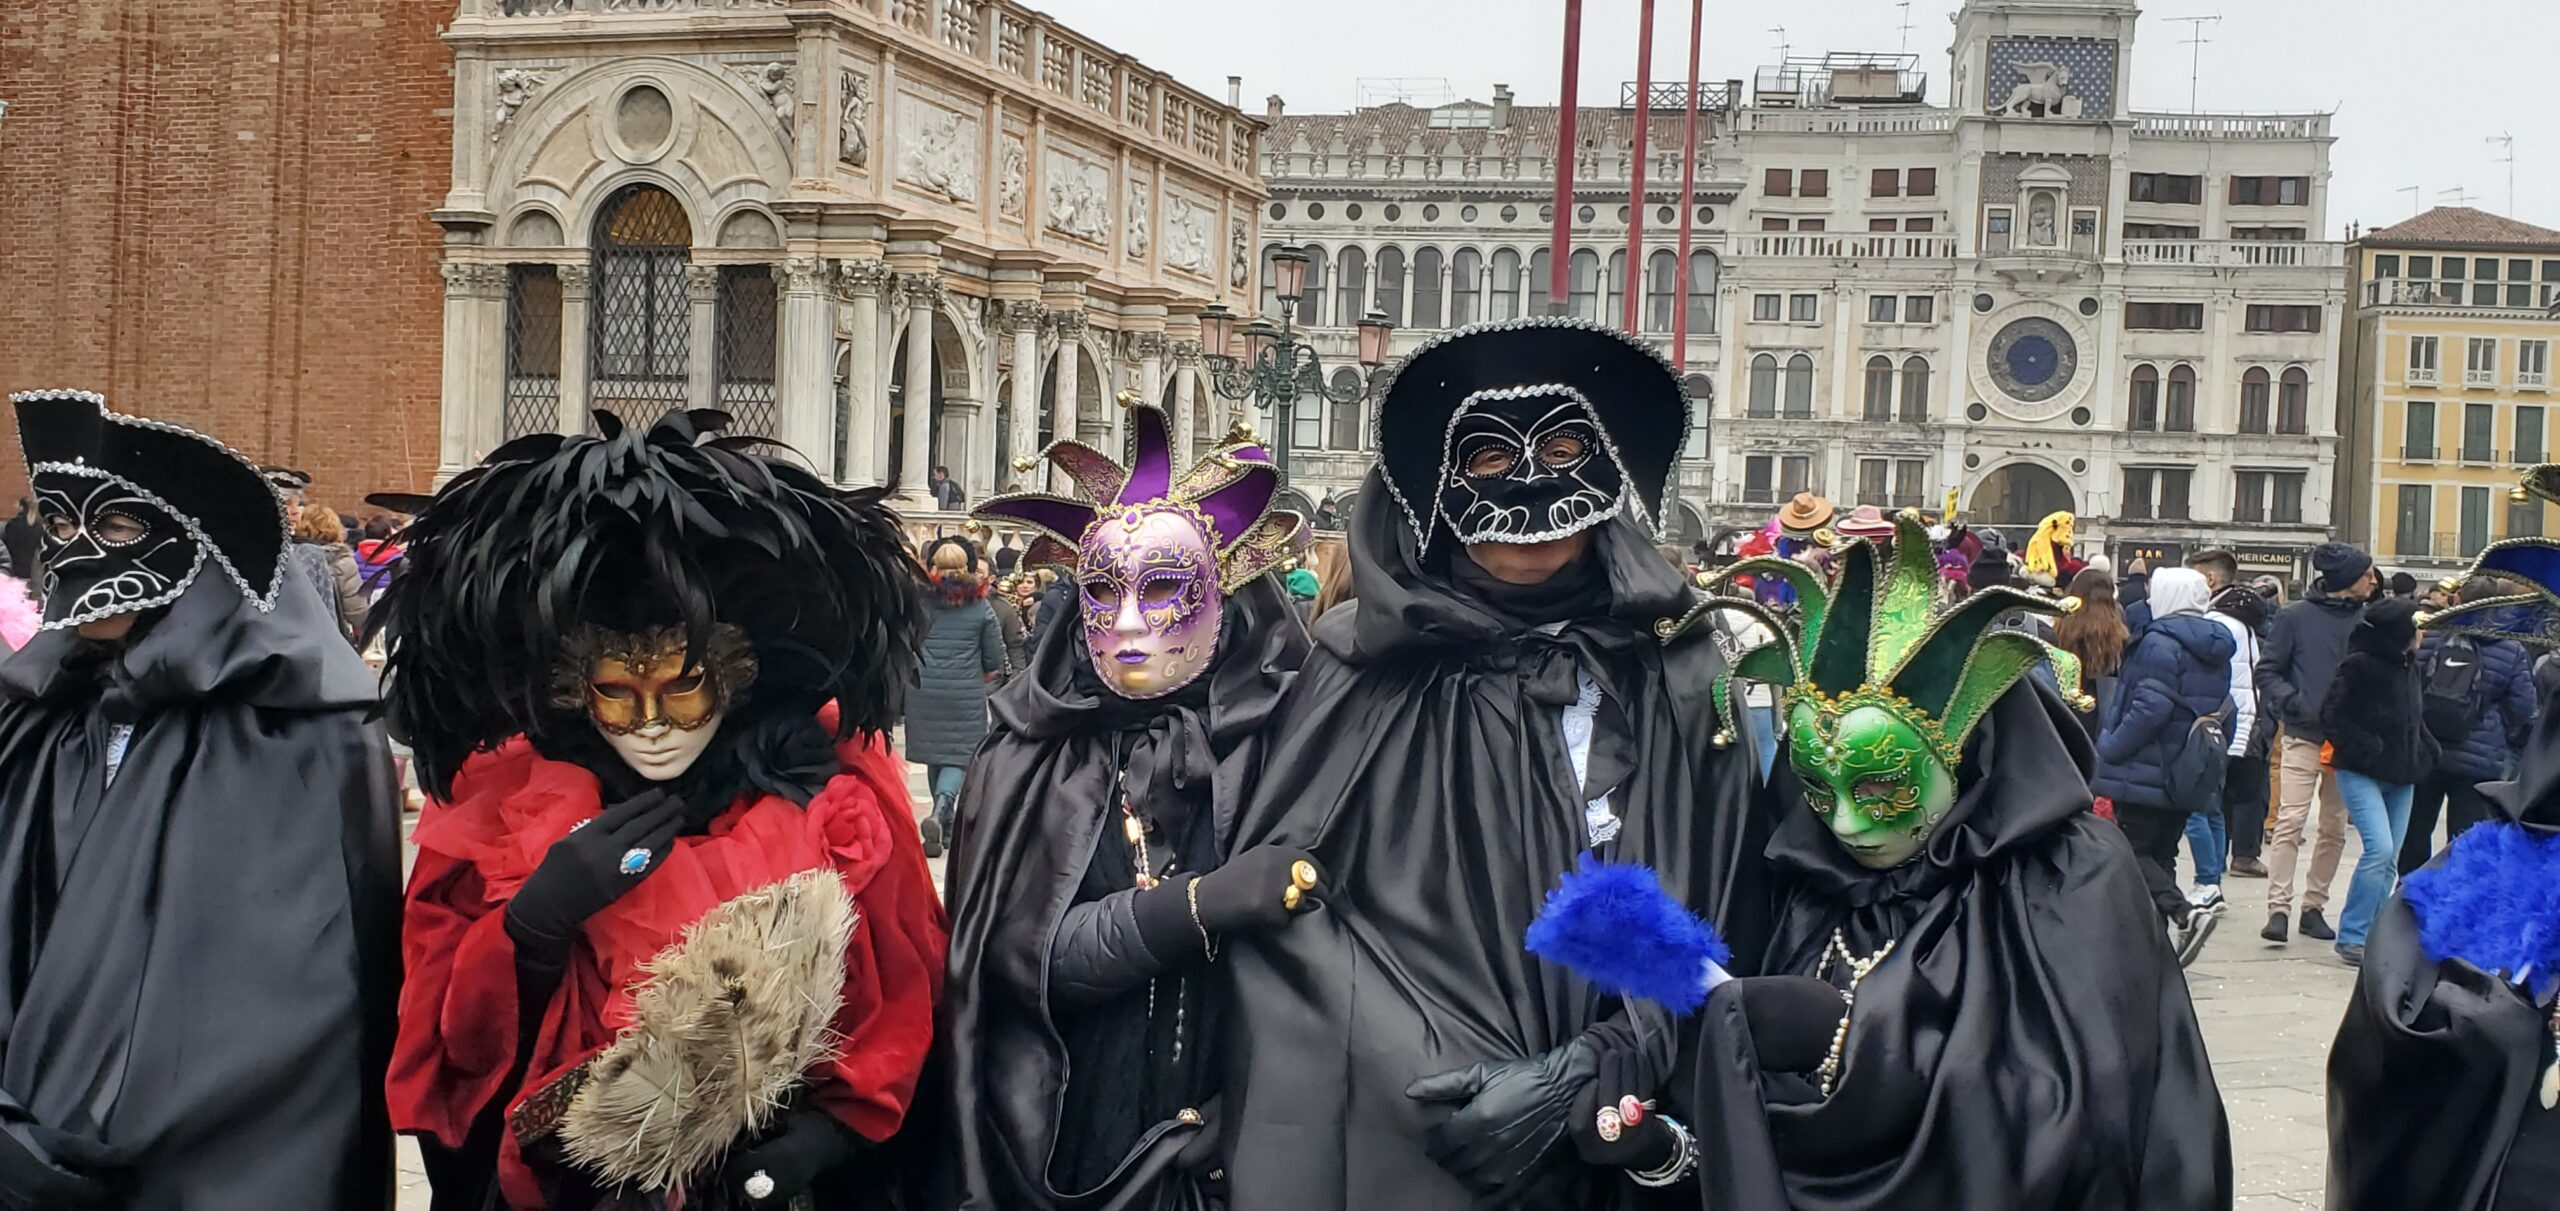 venetian masquerade ball costumes